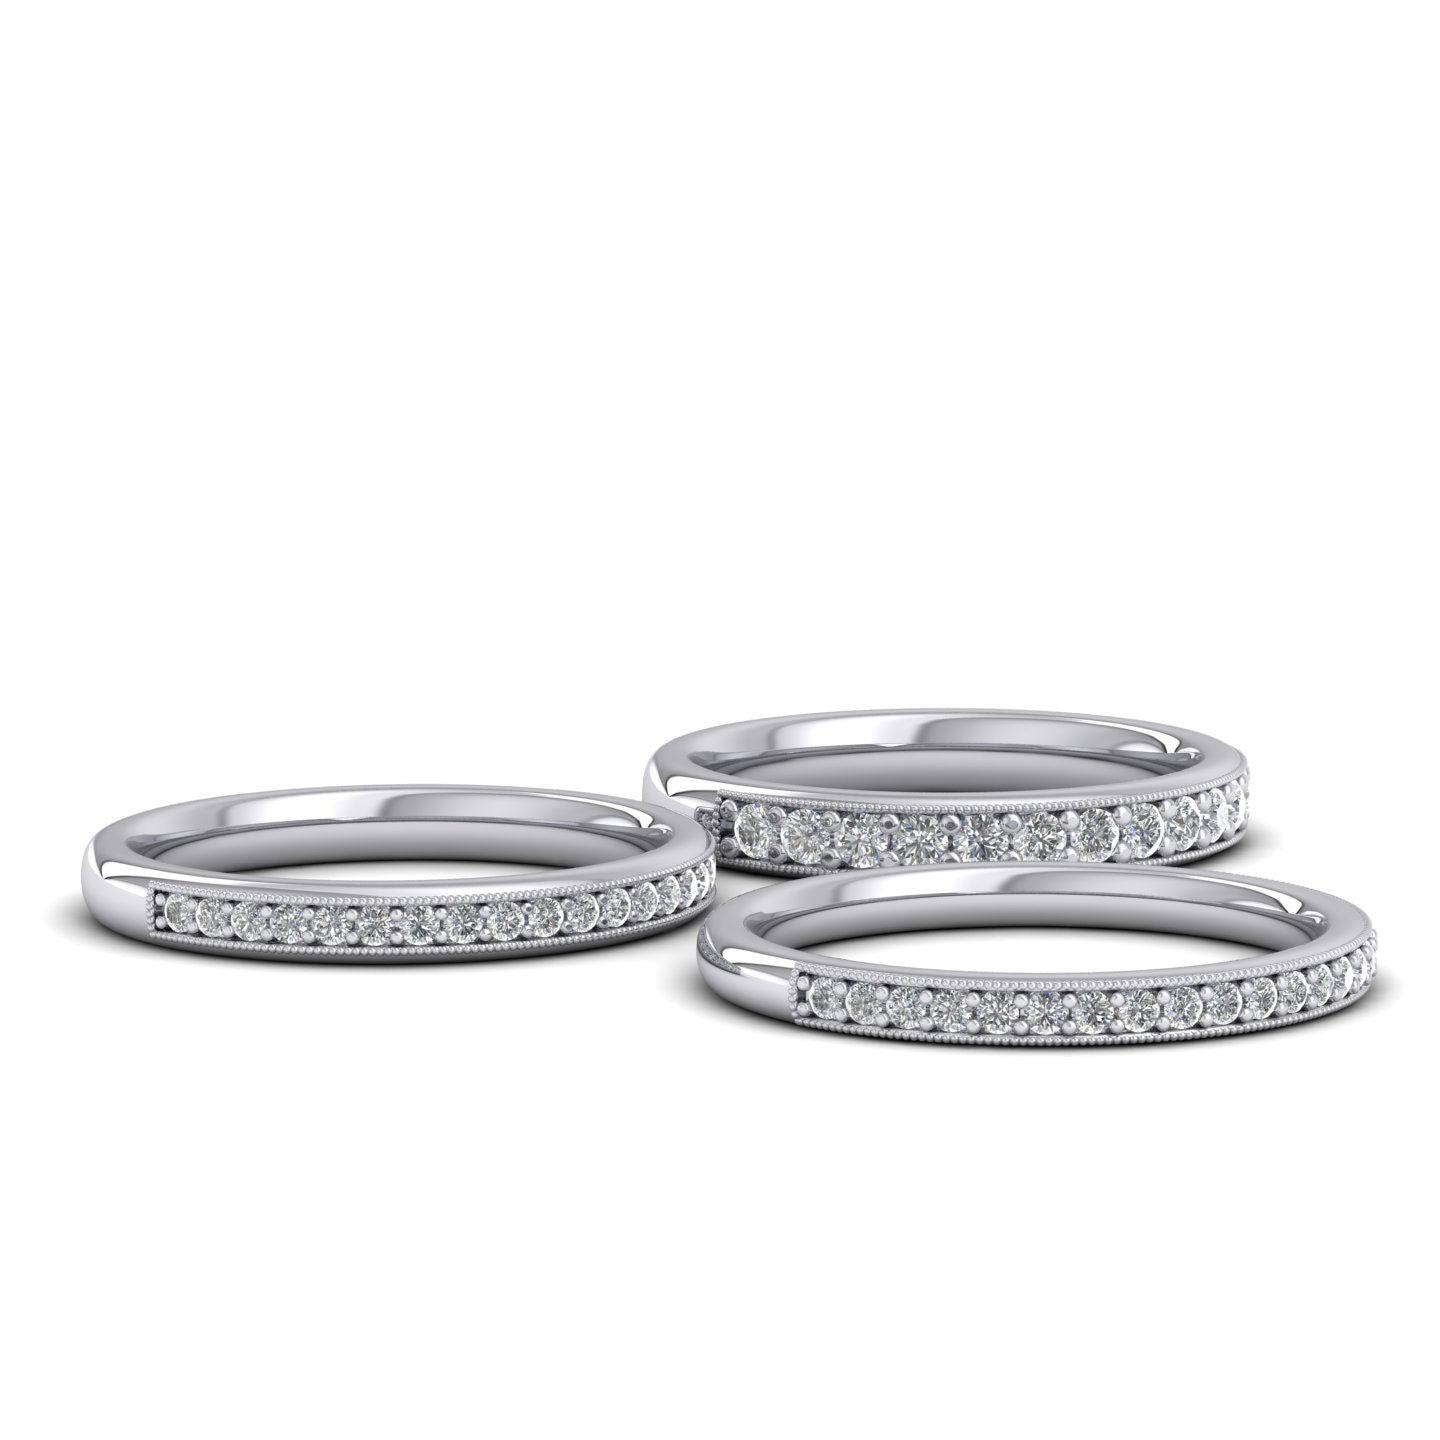 Half Bead Set 0.4ct Round Brilliant Cut Diamond With Millgrain Surround 950 Platinum 3mm Wedding Ring